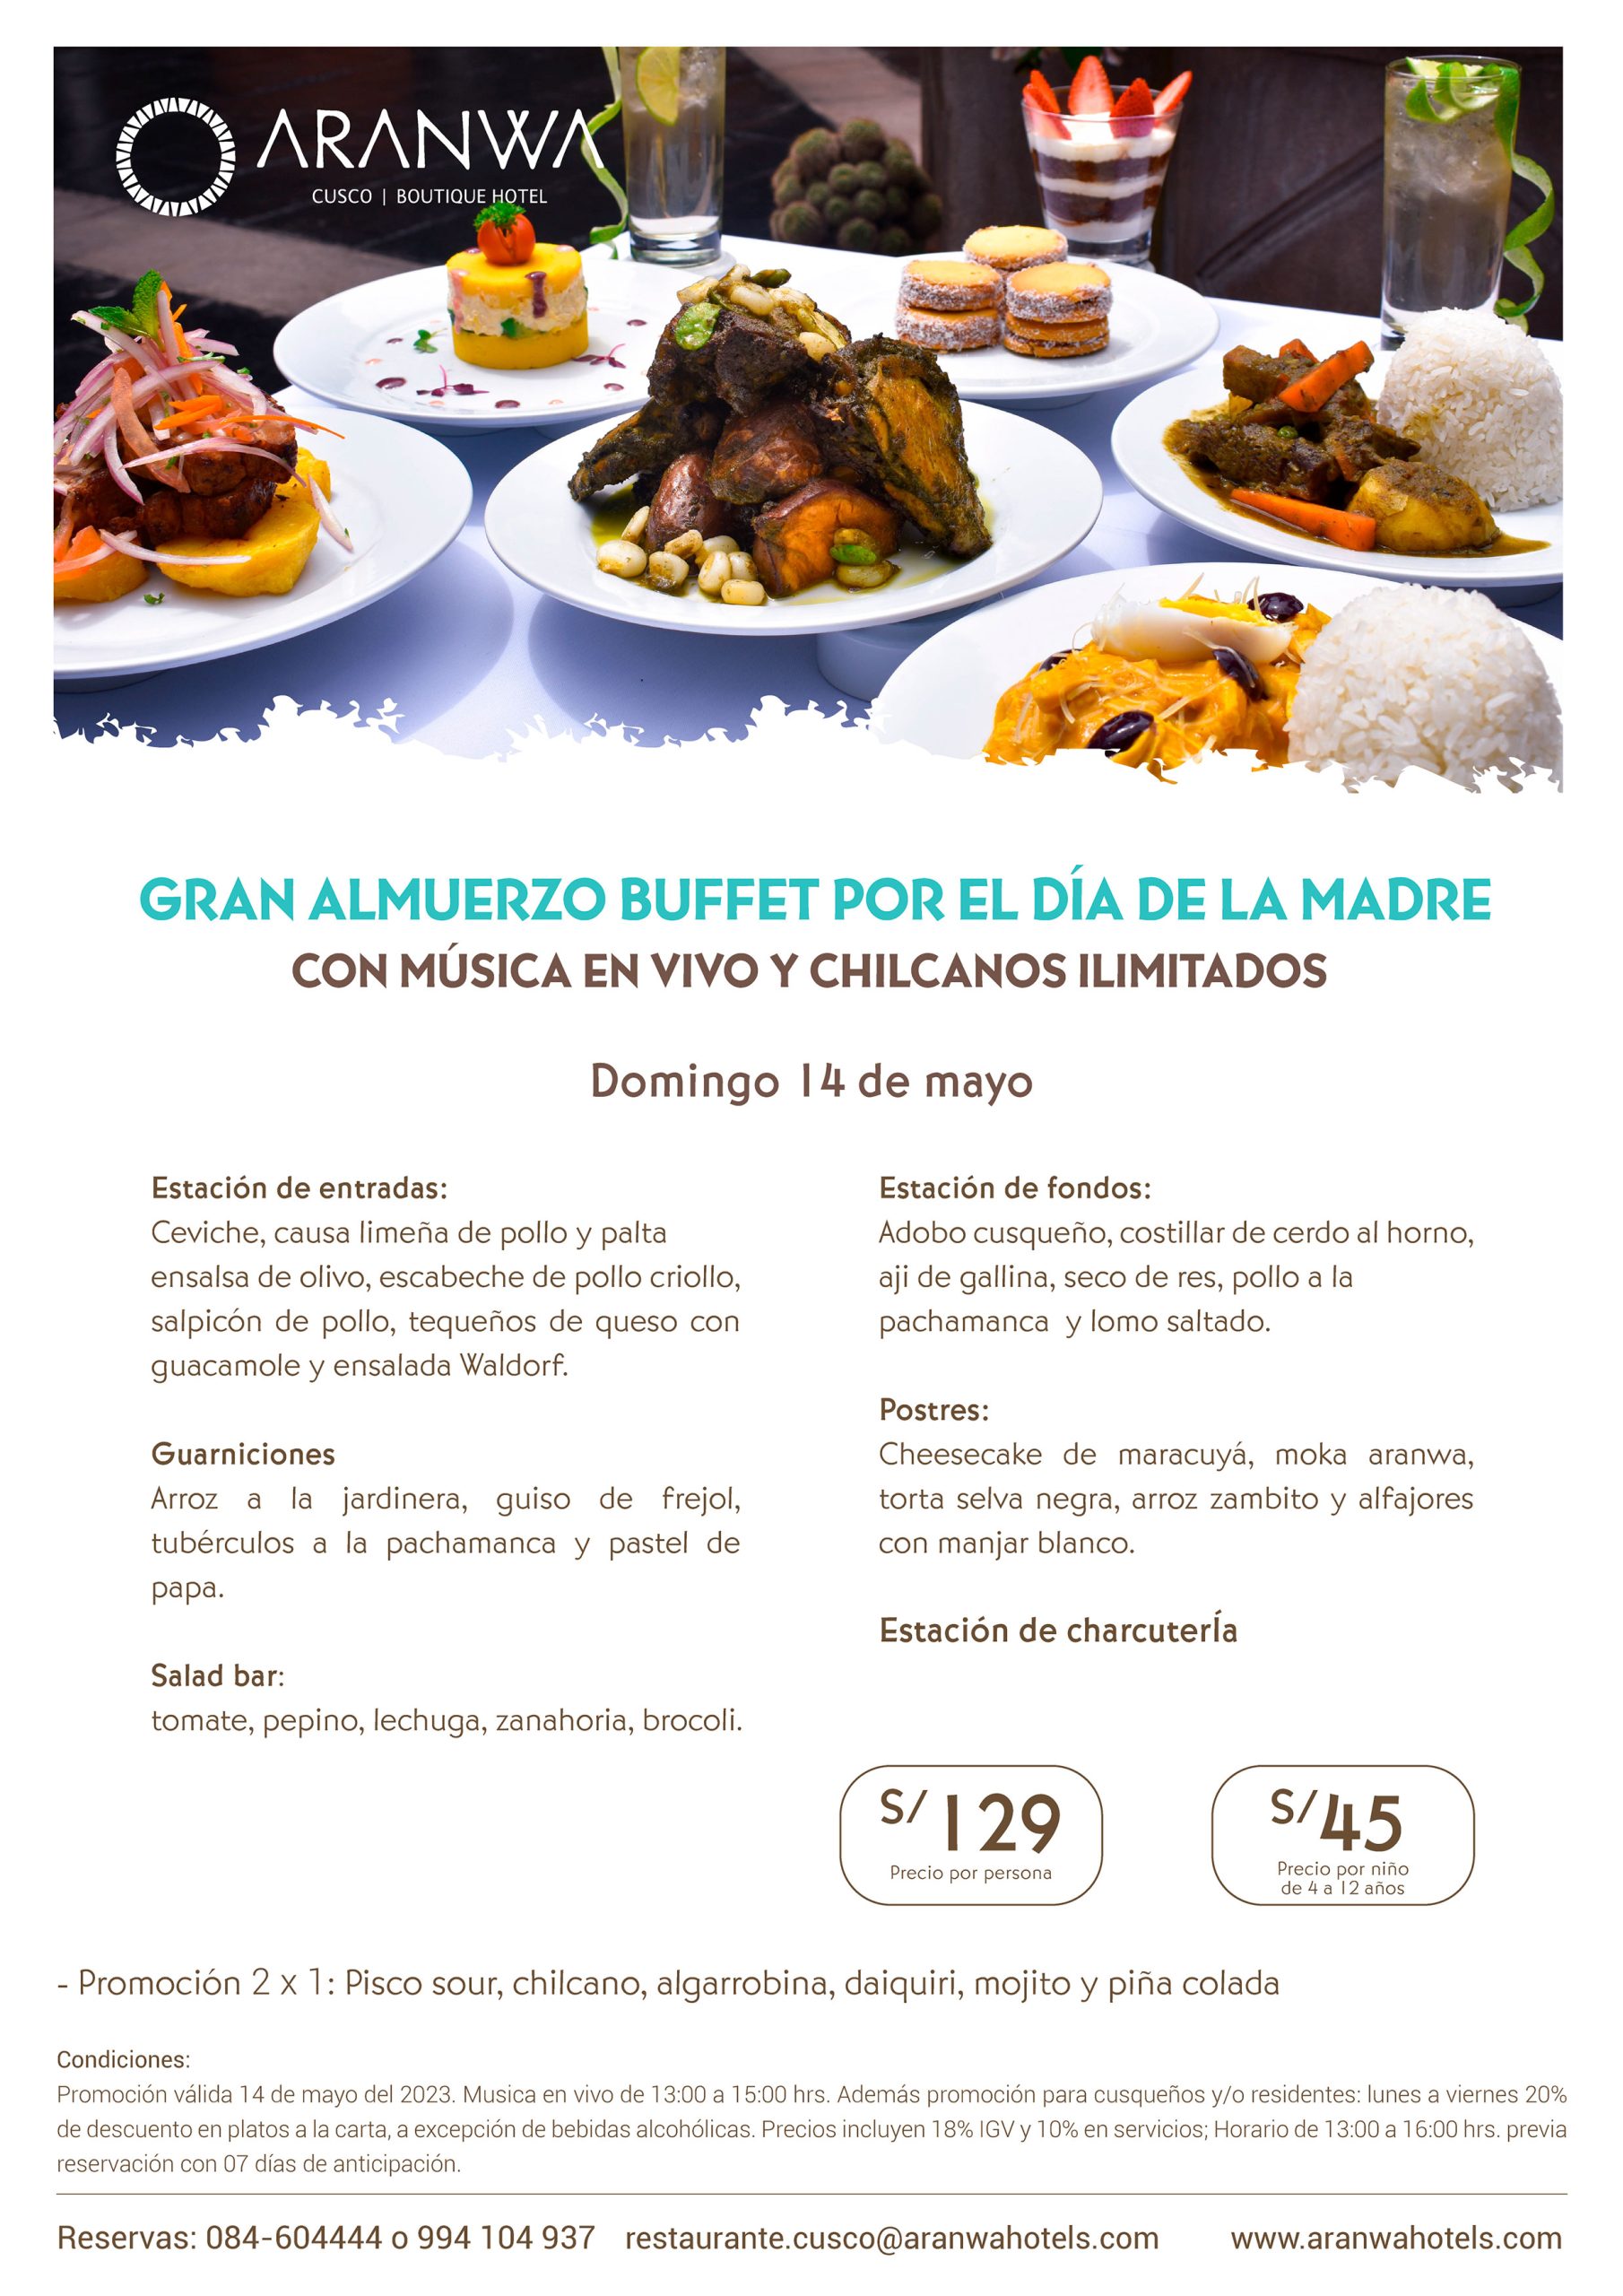 Almuerzo buffet Día de la madre | Aranwa Cusco Boutique - Aranwa Hotels  Resorts & SpasAranwa Hotels Resorts & Spas